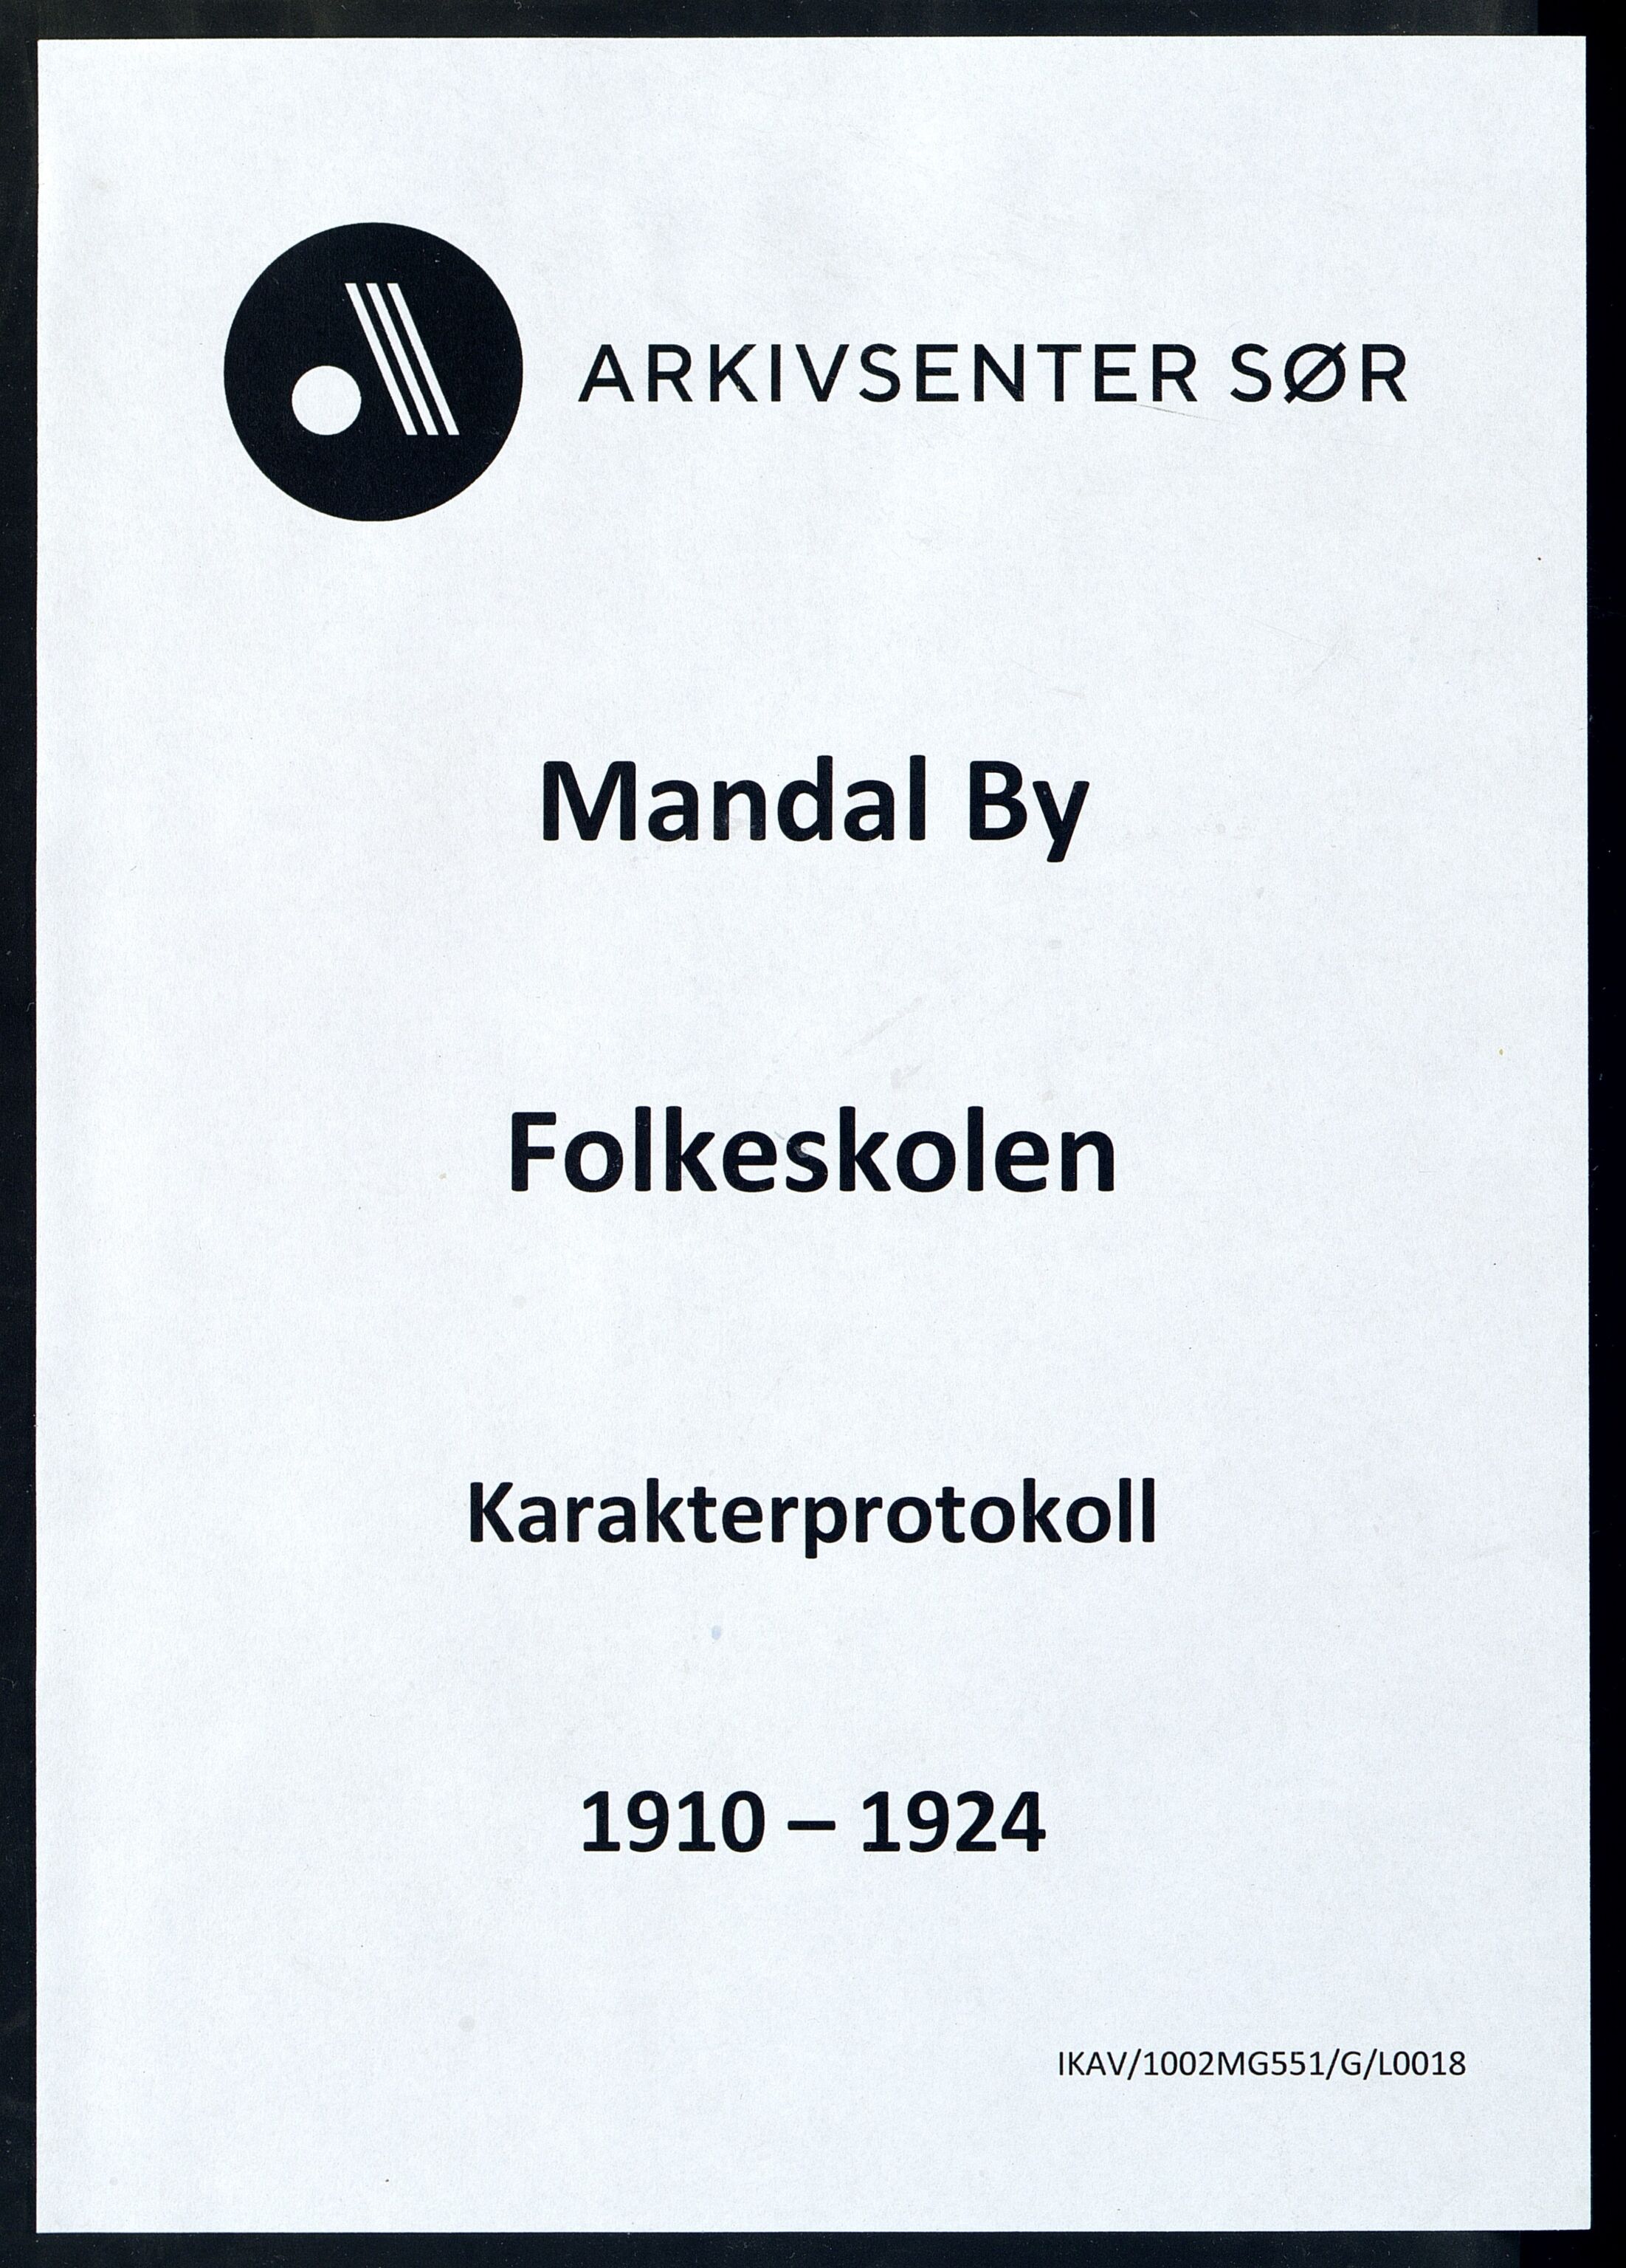 Mandal By - Mandal Allmueskole/Folkeskole/Skole, IKAV/1002MG551/G/L0018: Karakterprotokoll, 1910-1924